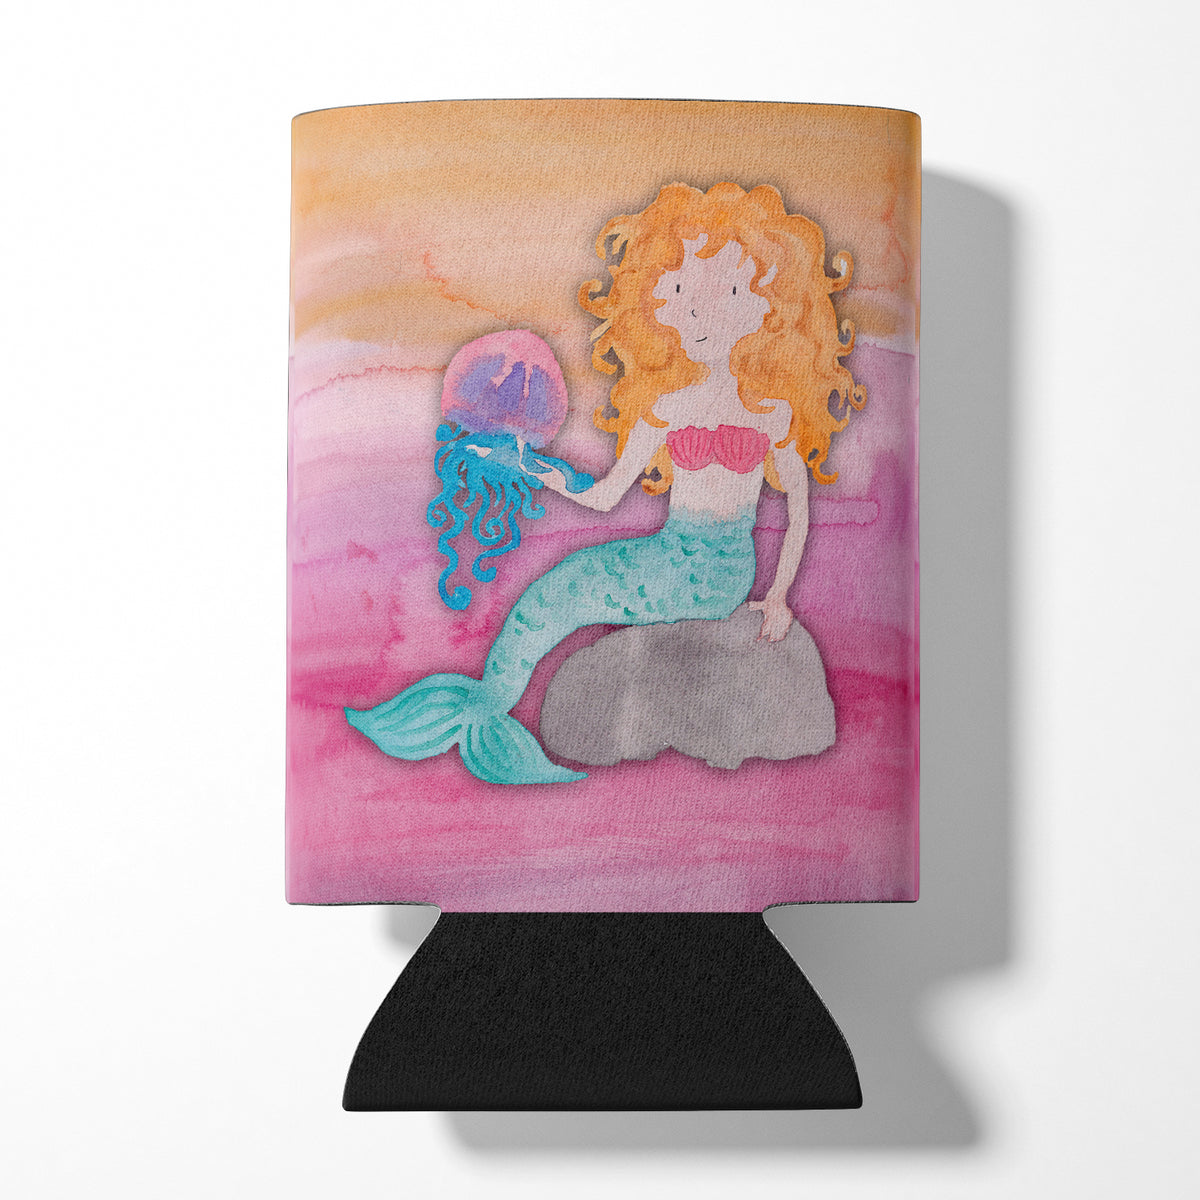 Blonde Mermaid Watercolor Can or Bottle Hugger BB7423CC